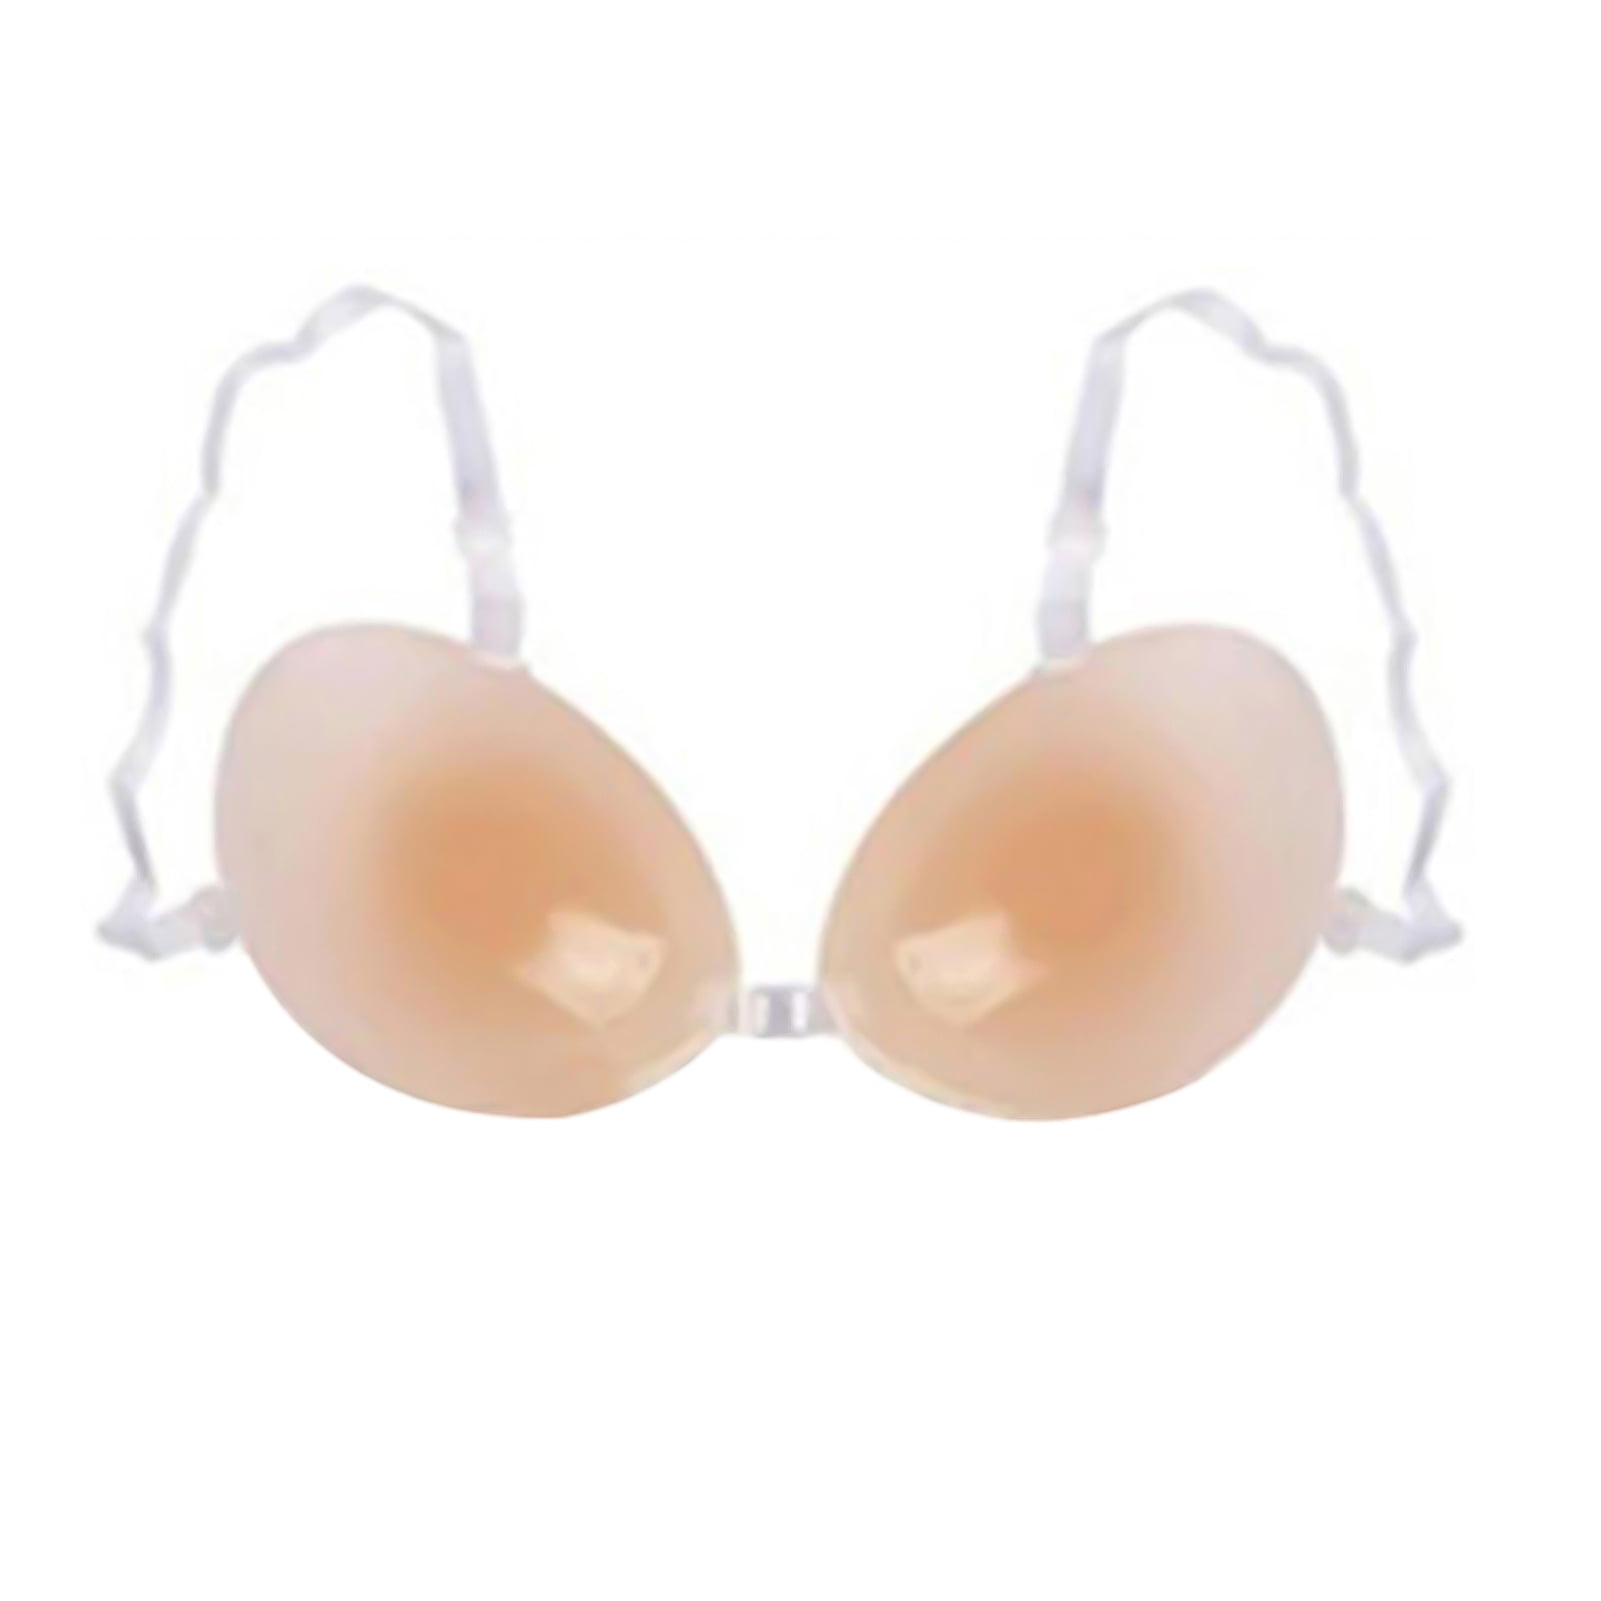 Teardrop Silicone Breast Forms F Cup Self-adhesive Boobs CD TG Bra